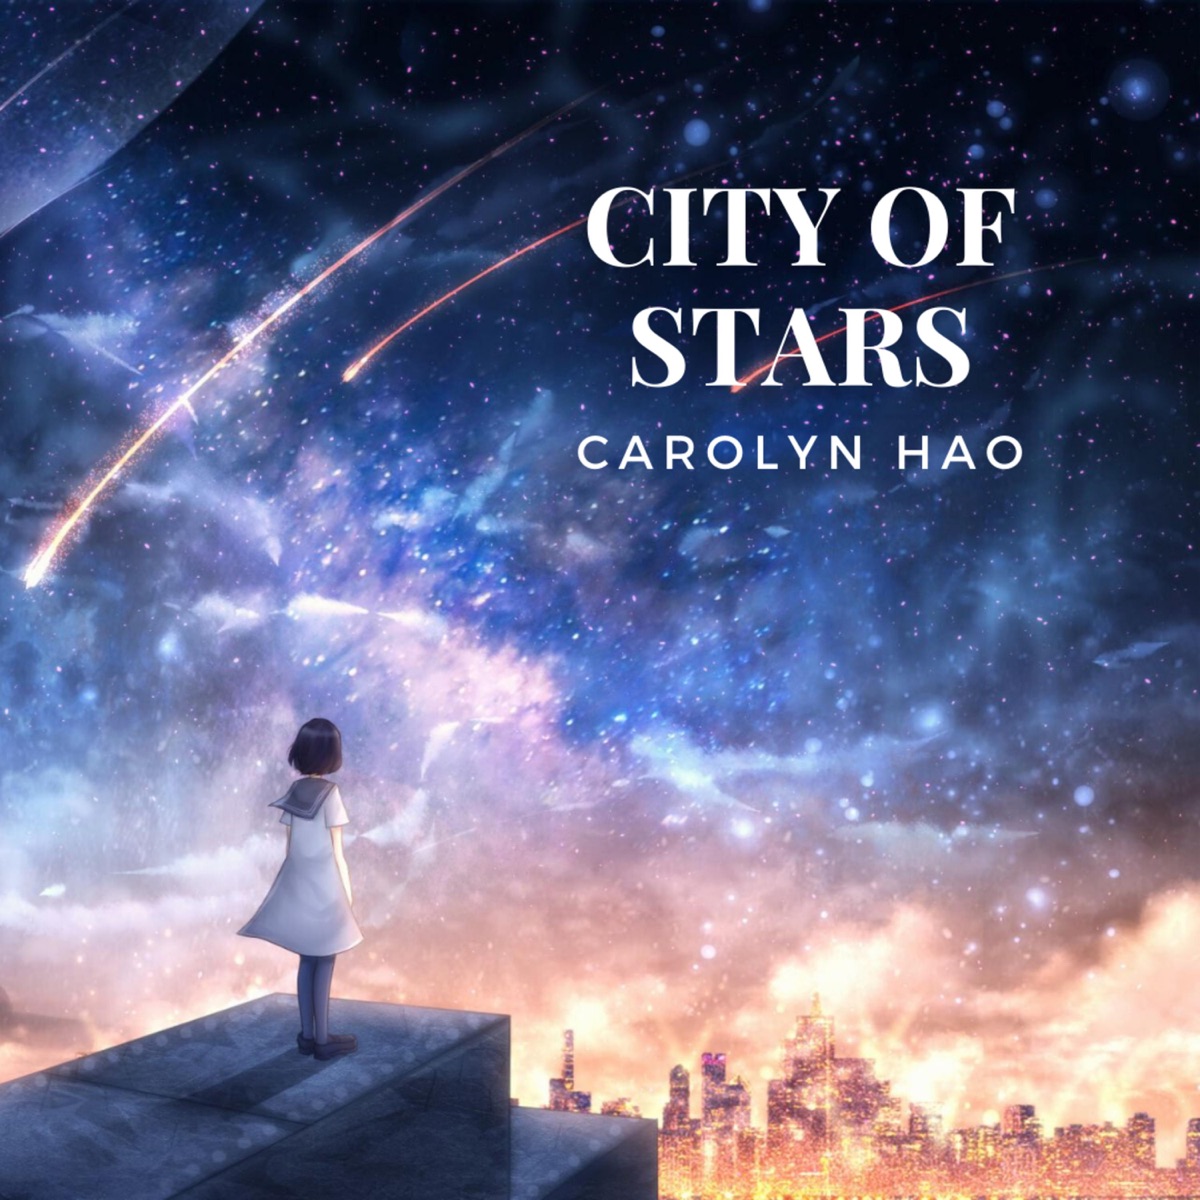 City of Stars - Single - Album by Carolyn Hao - Apple Music